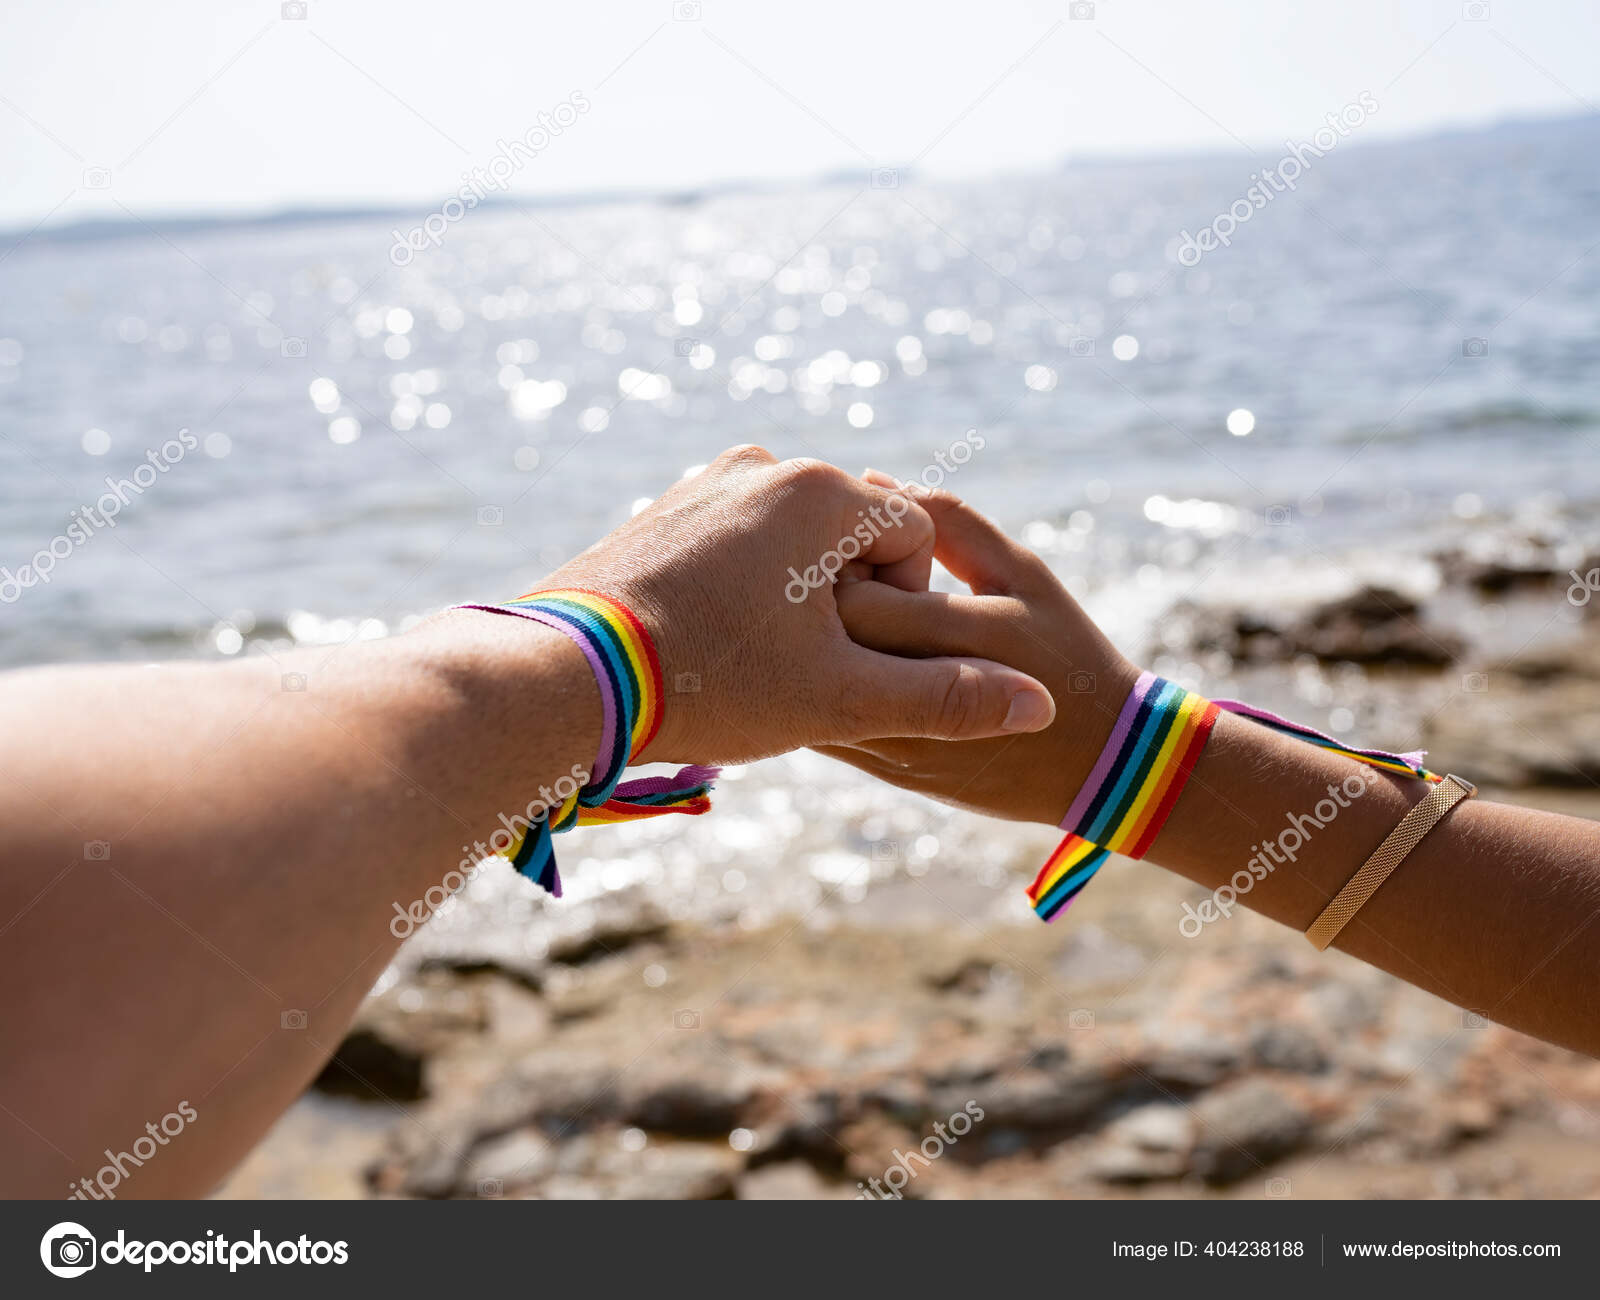 Elke week gordijn Gebakjes Hand Together Couple Beach Bracelet Stock Photo by ©Josecarlosichiro  404238188